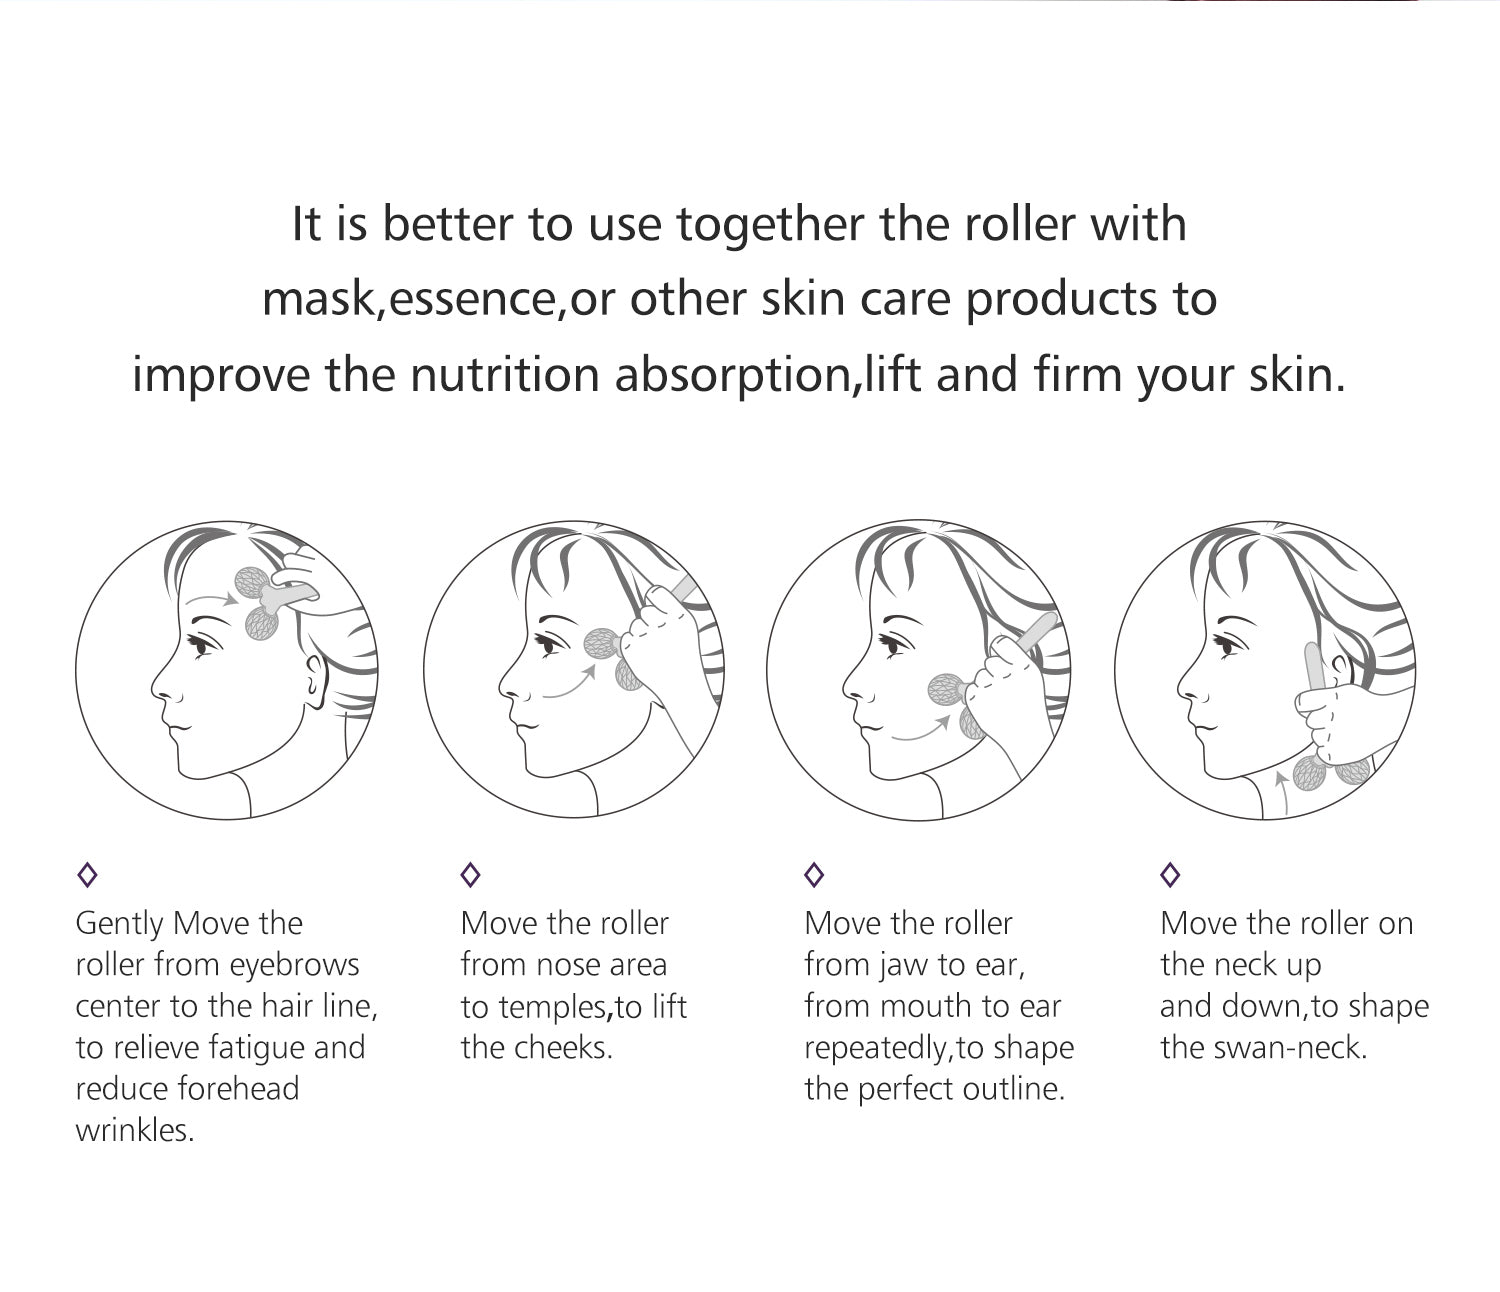 3D Face Massage Roller – Face Care Massage Tool Exerciser